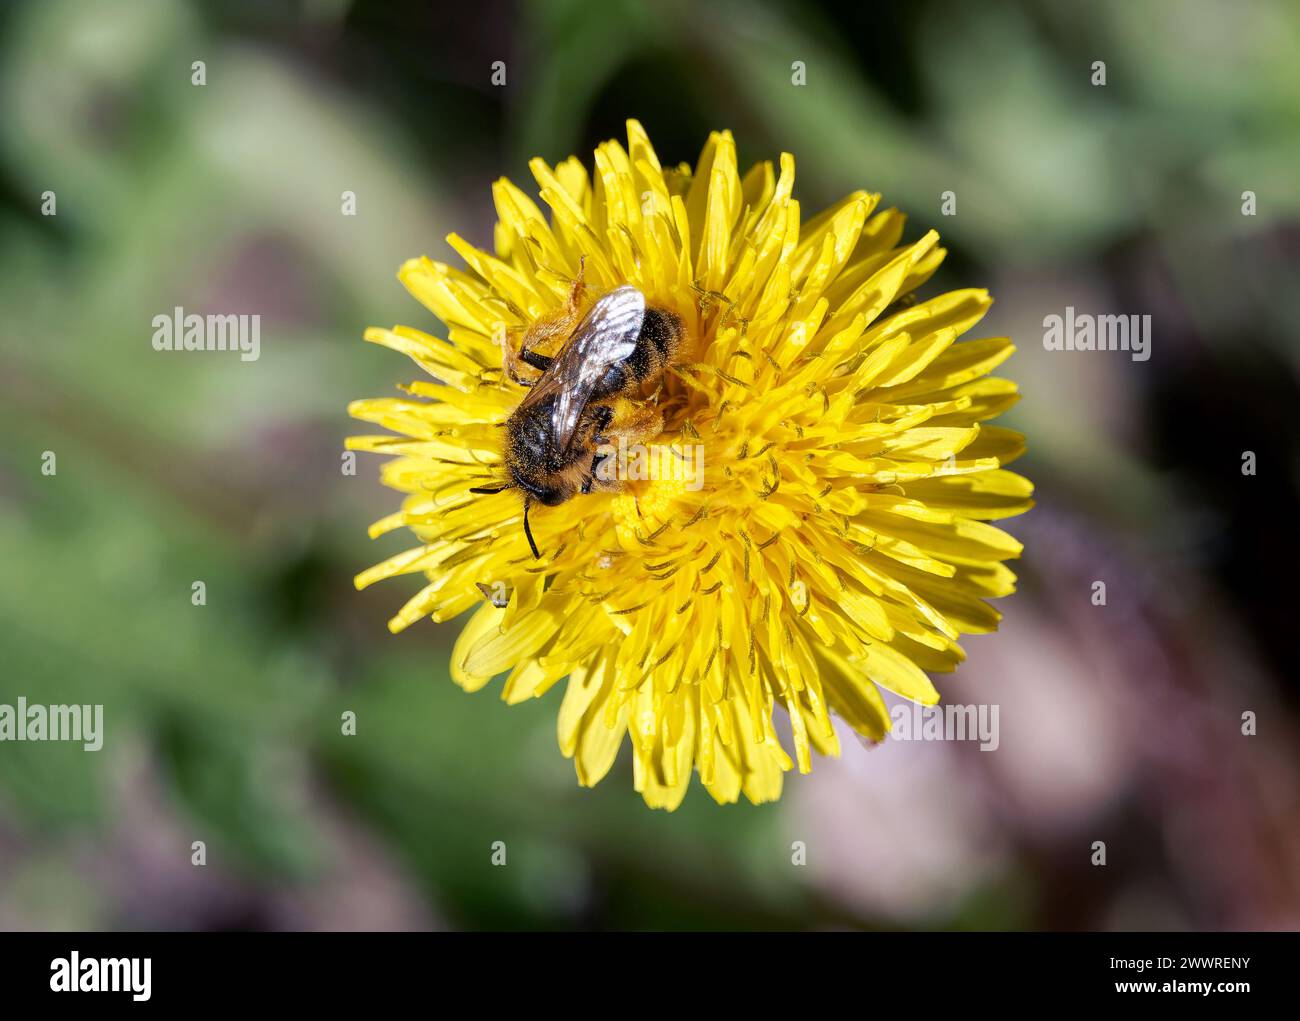 Bee, Sandbiene, Andrène, Andrena sp., bányászméh, Budapest, Hungría, Magyarország, Europa Foto de stock